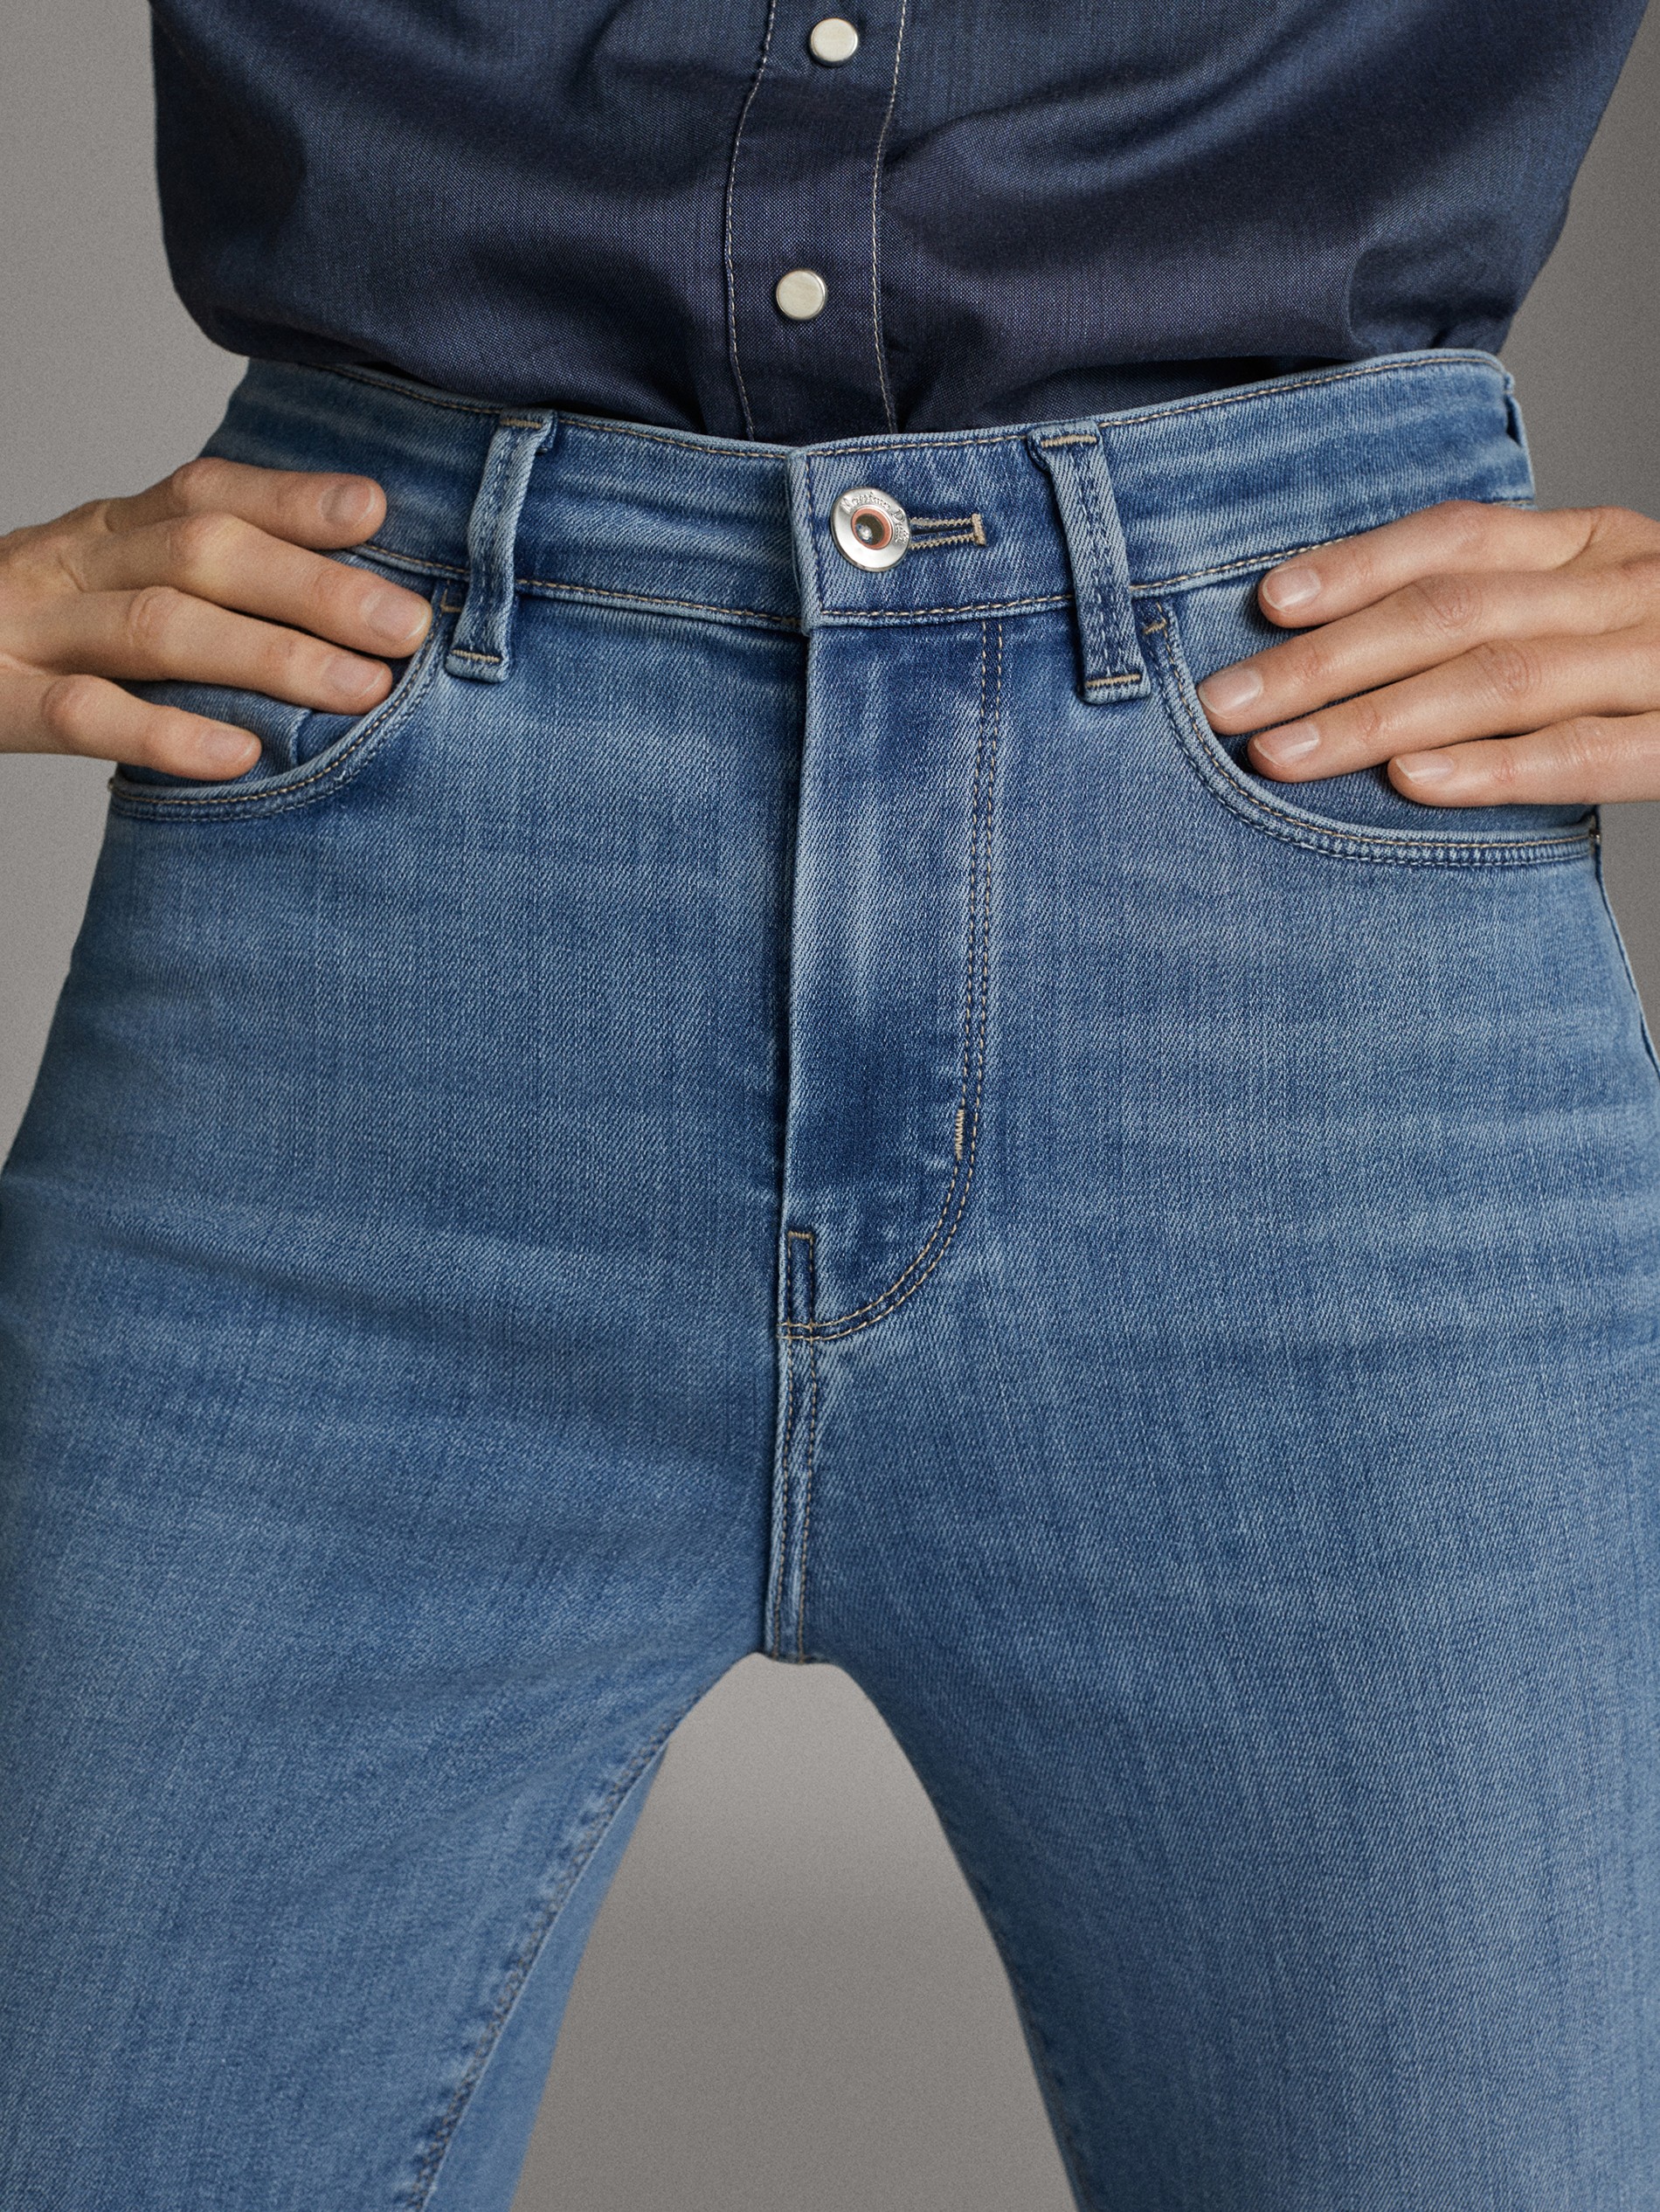 massimo dutti high rise skinny jeans